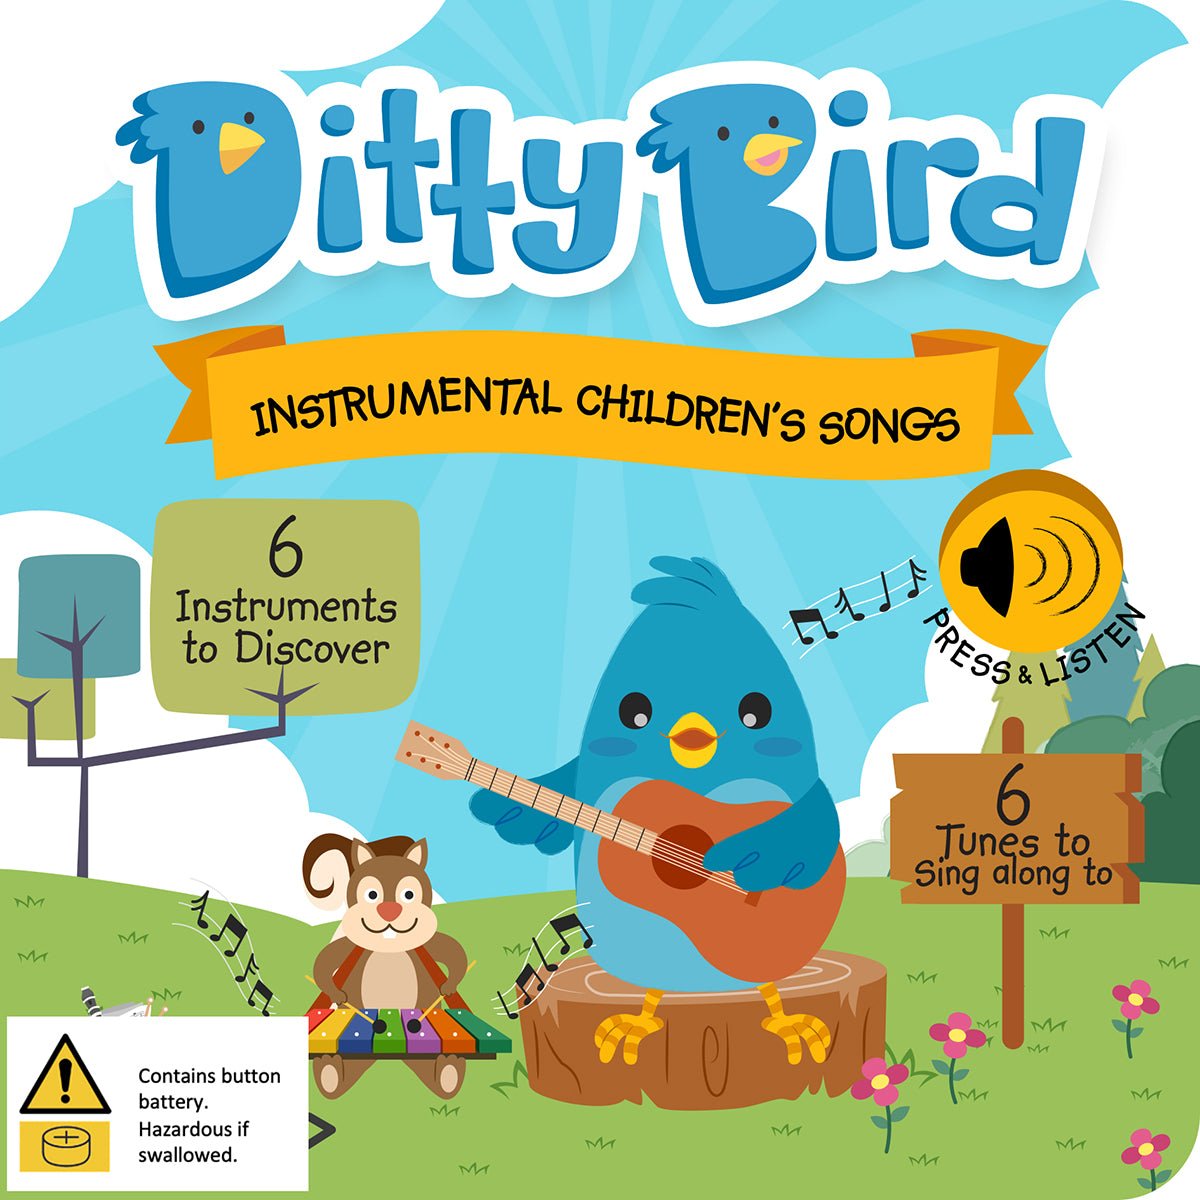 Ditty Bird Instrumental Children's Songs Book | Ditty Bird